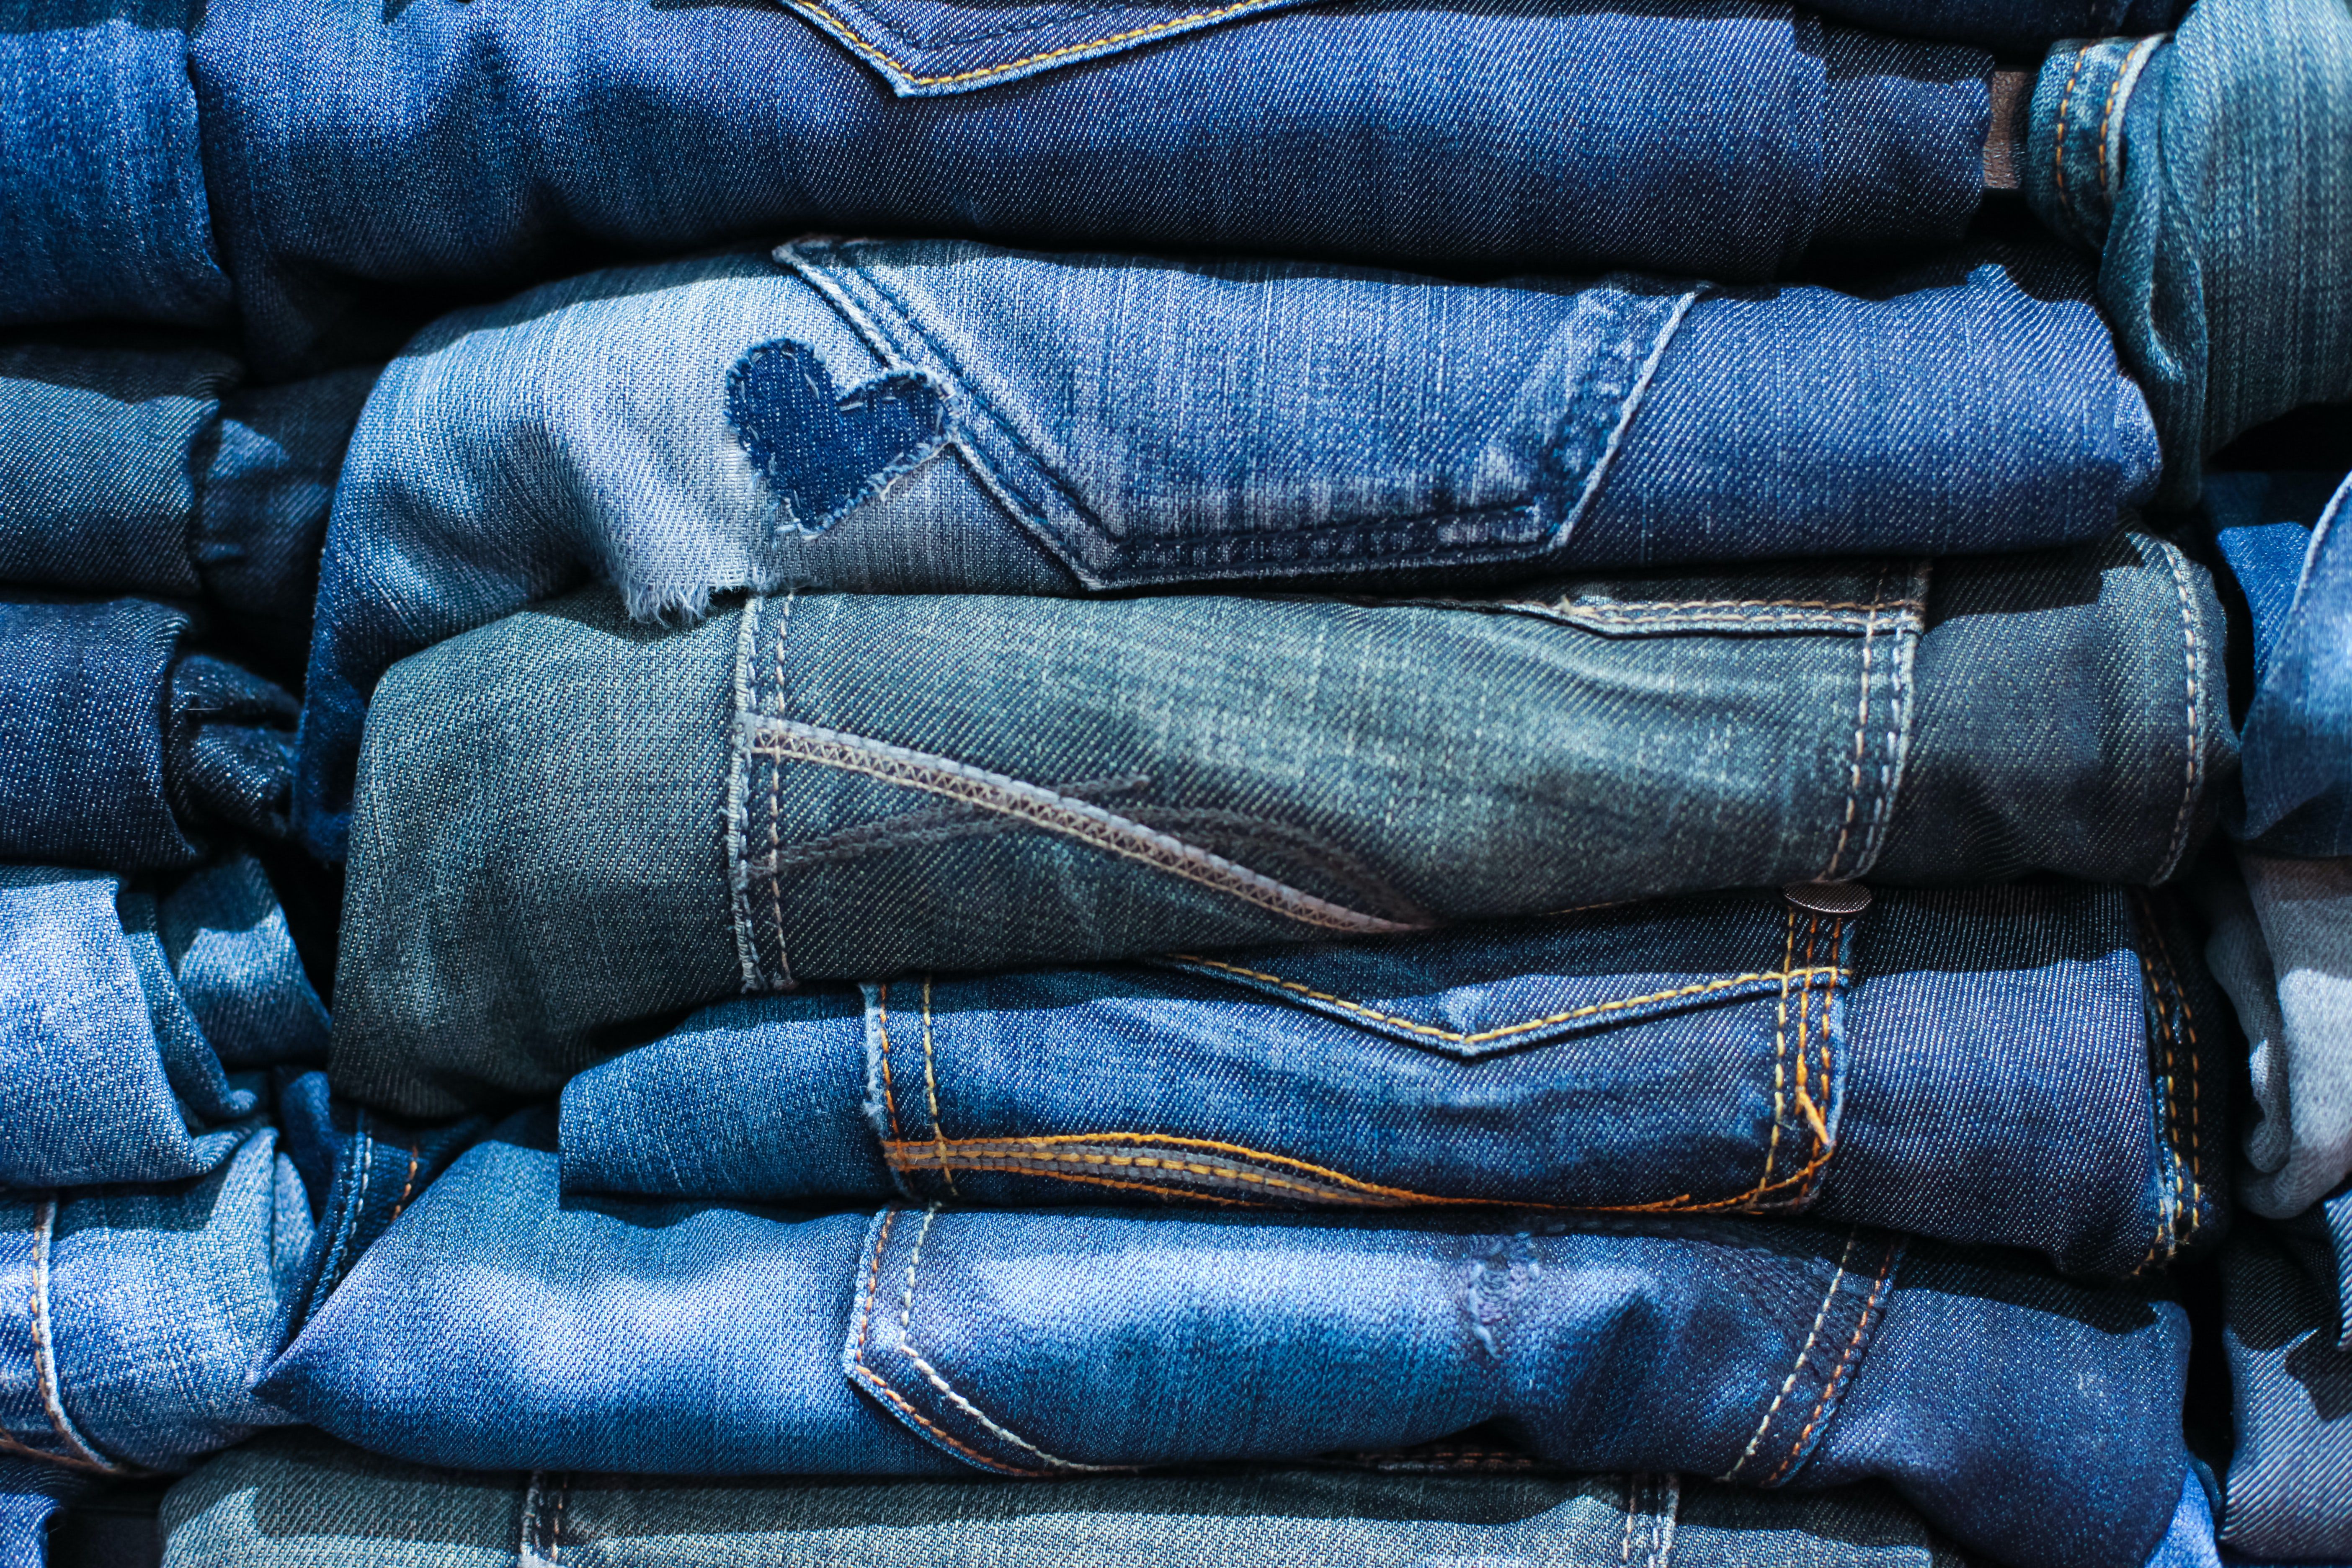 $715 Million Mavi Jeans IPO Could Be Turkey's Largest Since 2013